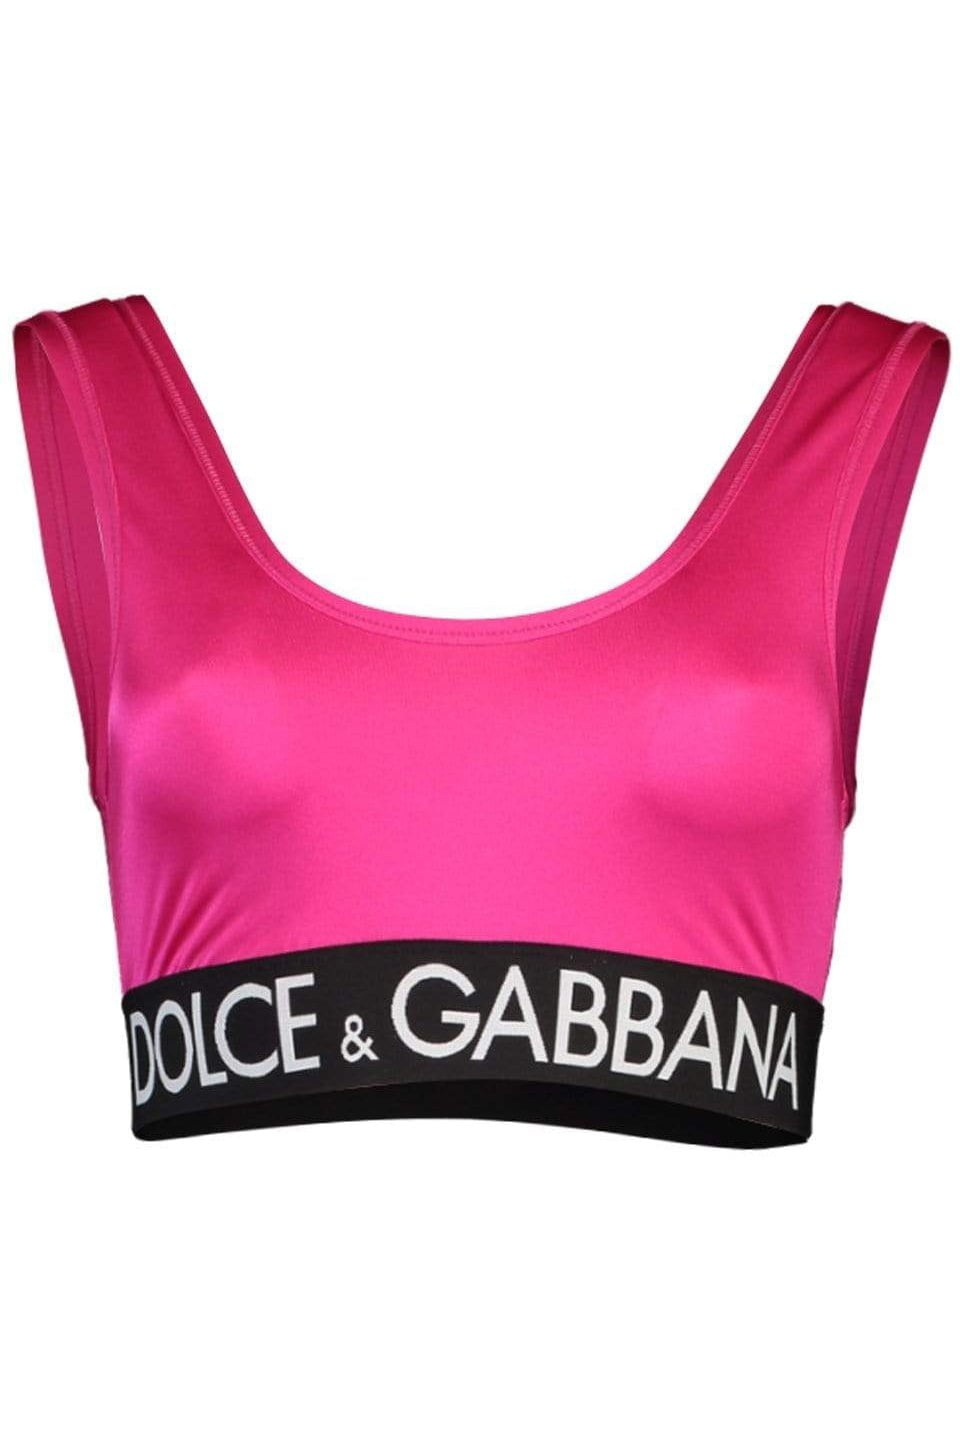 Dolce & Gabbana \ Clothing \ Tops